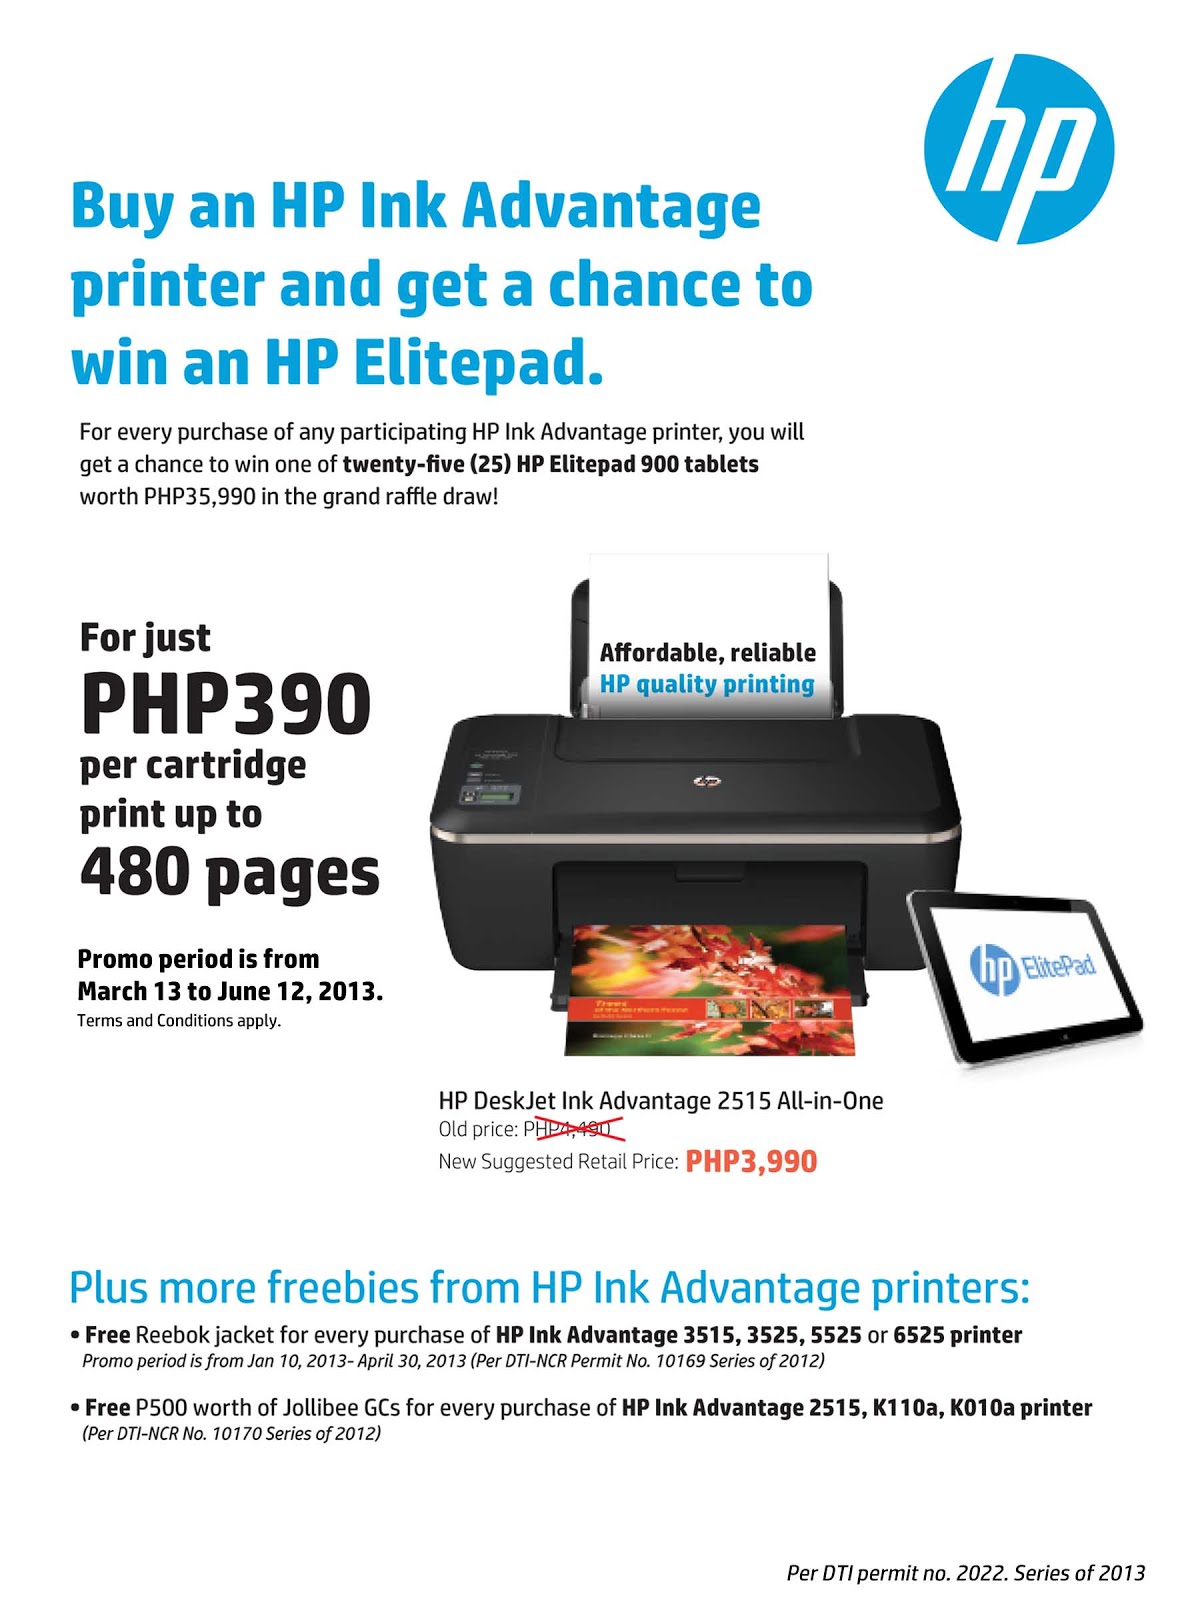 Win with HP Ink Advantage Printers Raffle Promo